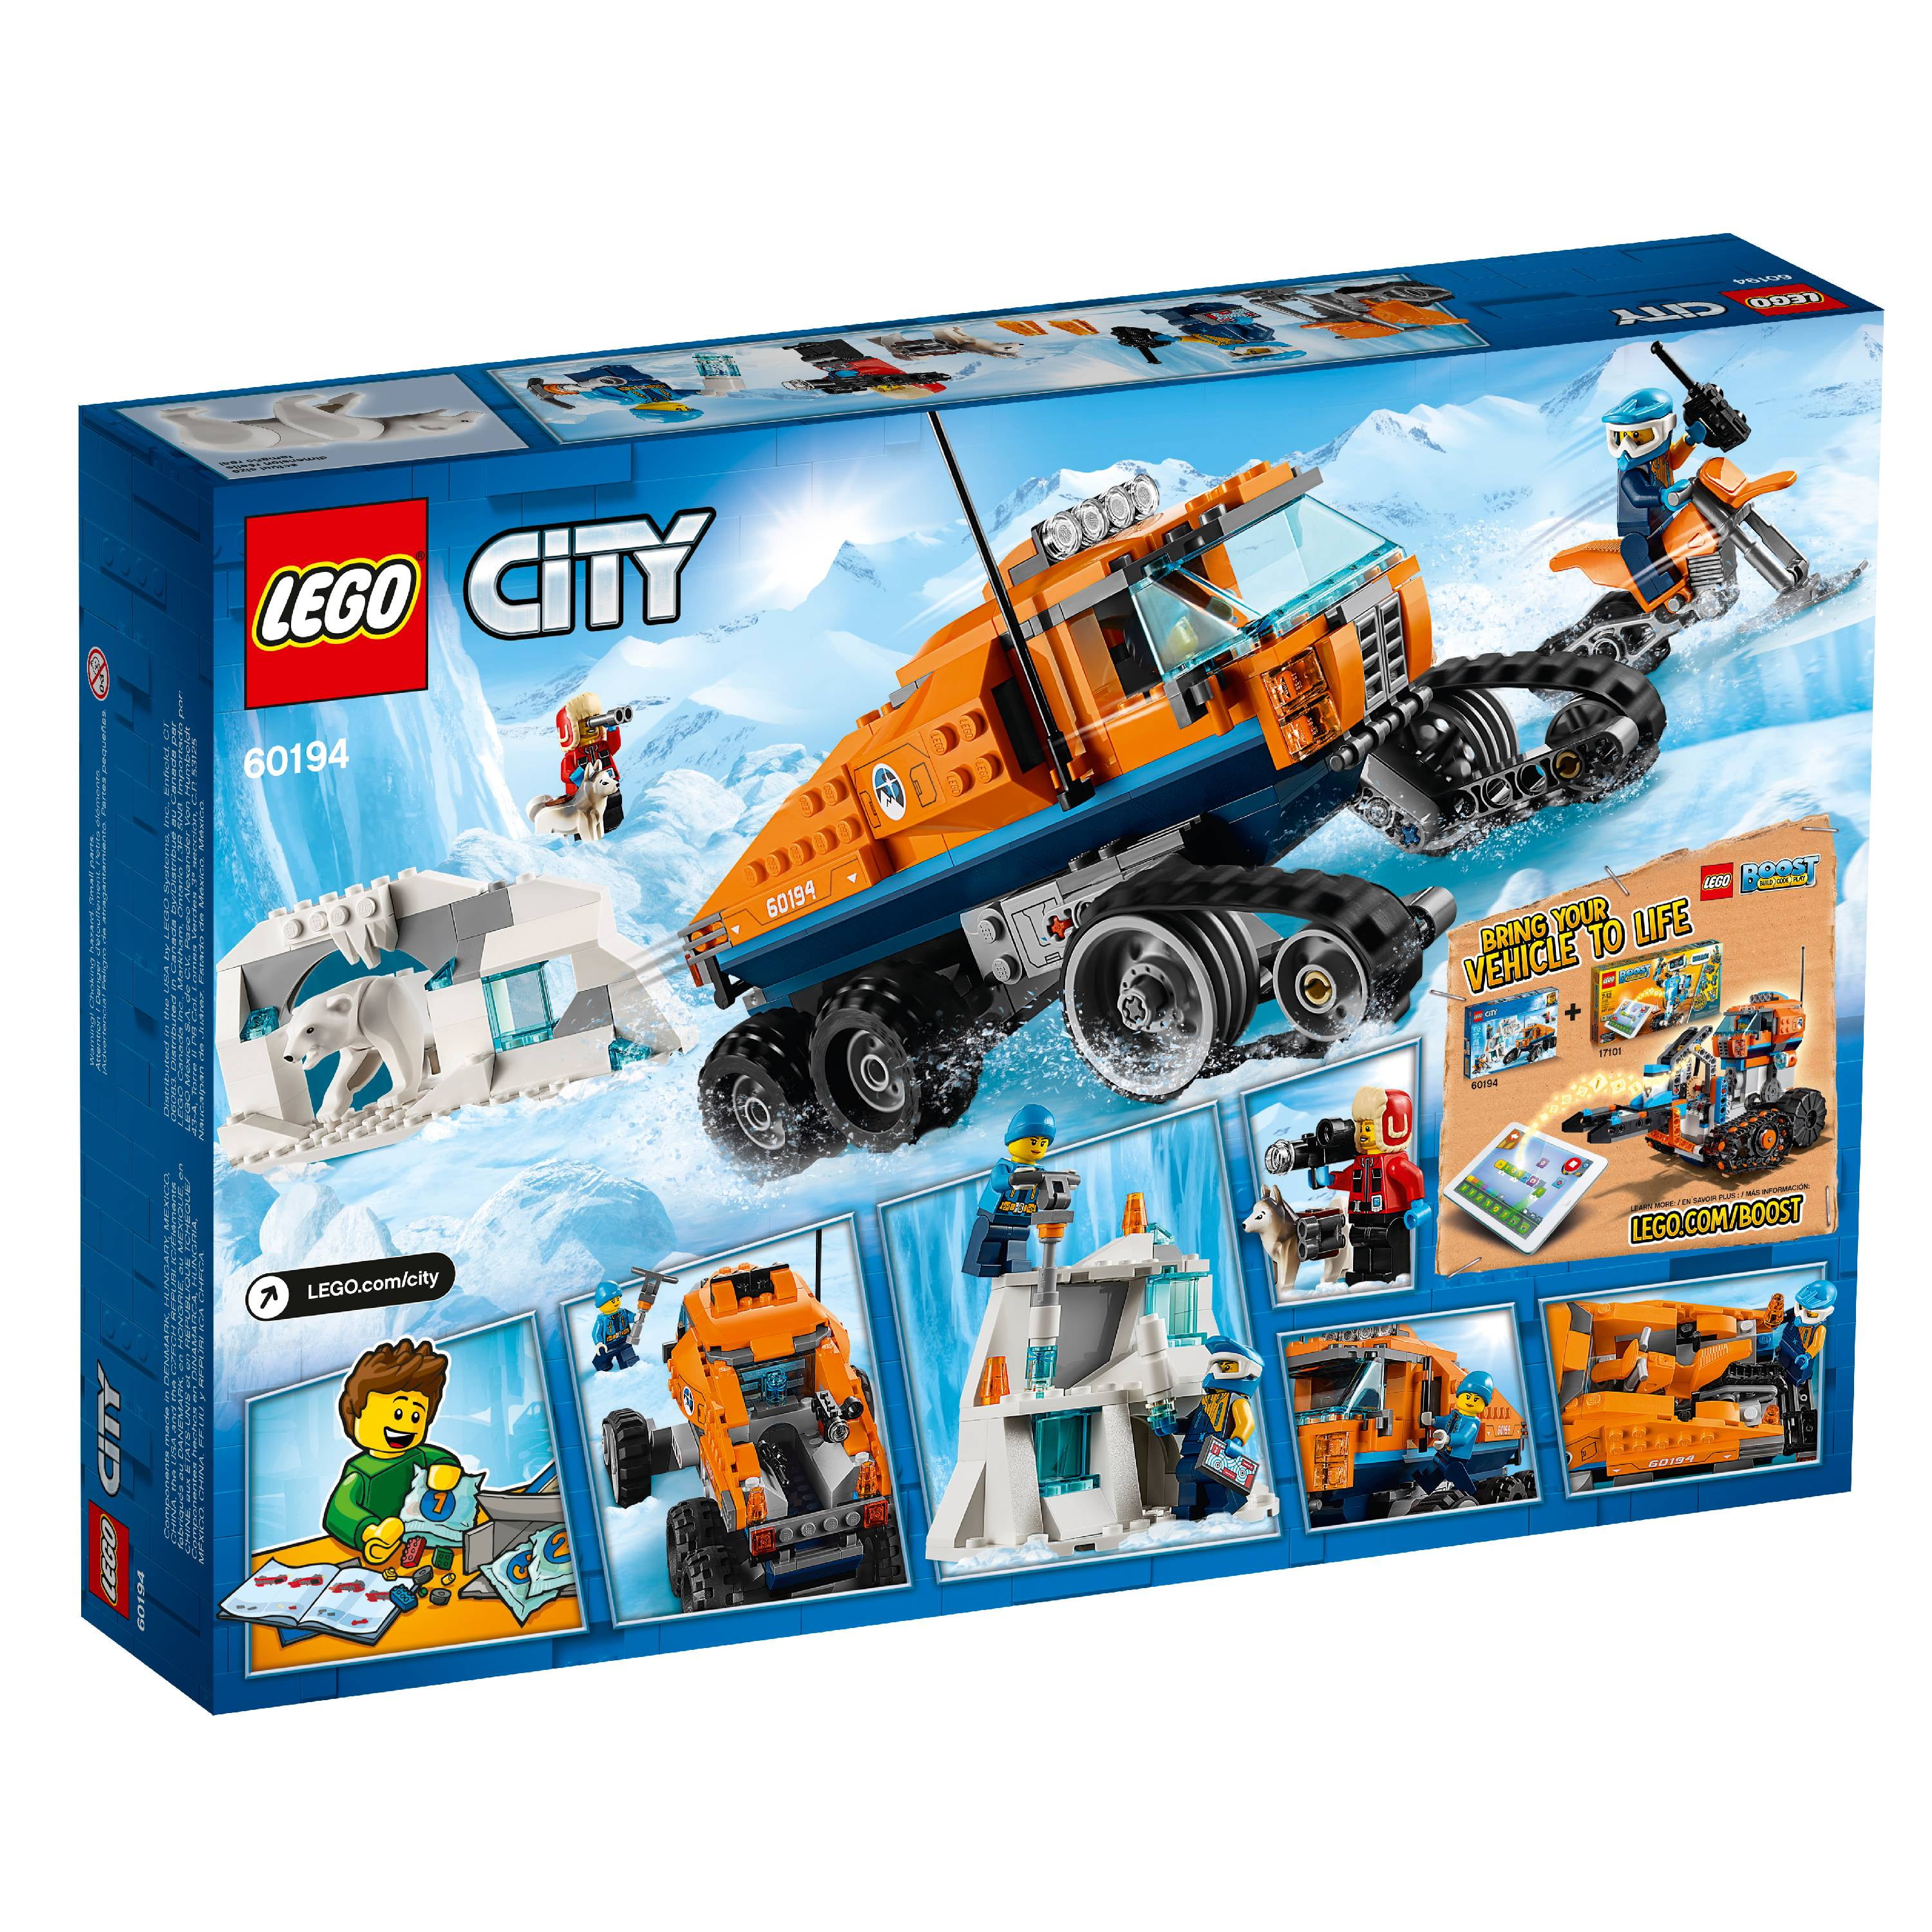 LEGO City Expedition Truck 60194 - Walmart.com